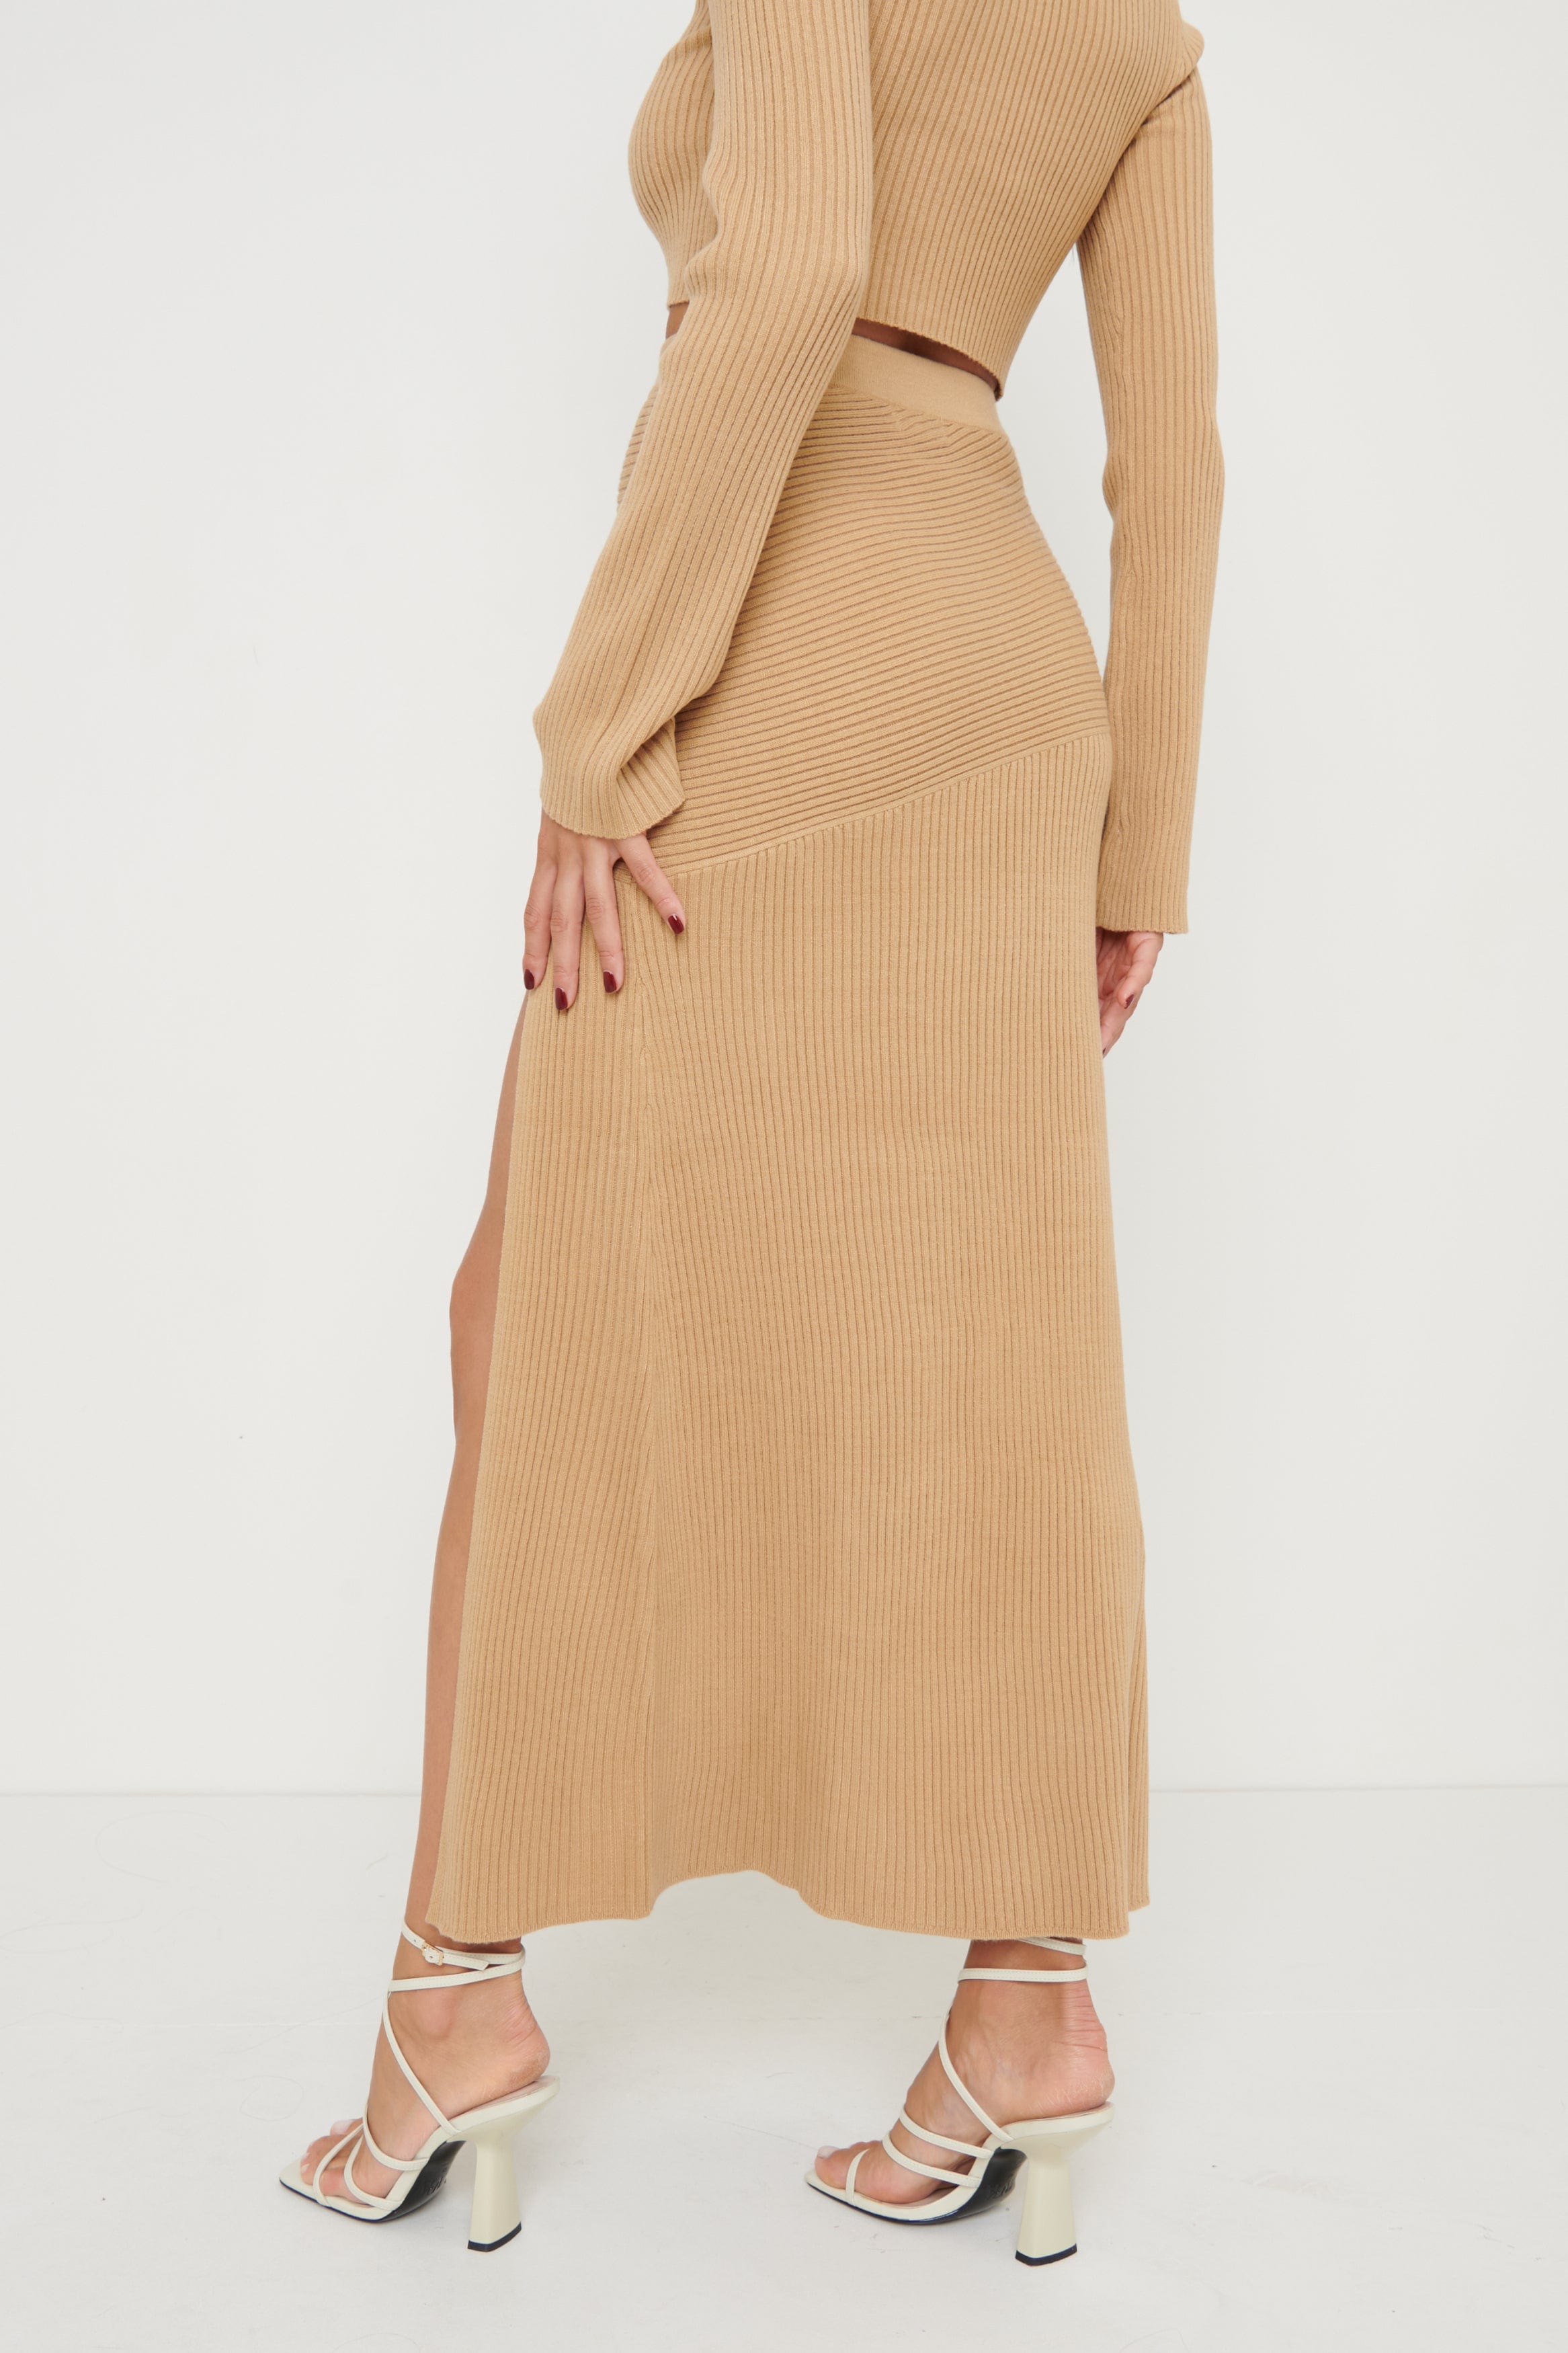 Sofia Asymmetric Knit Skirt - Camel